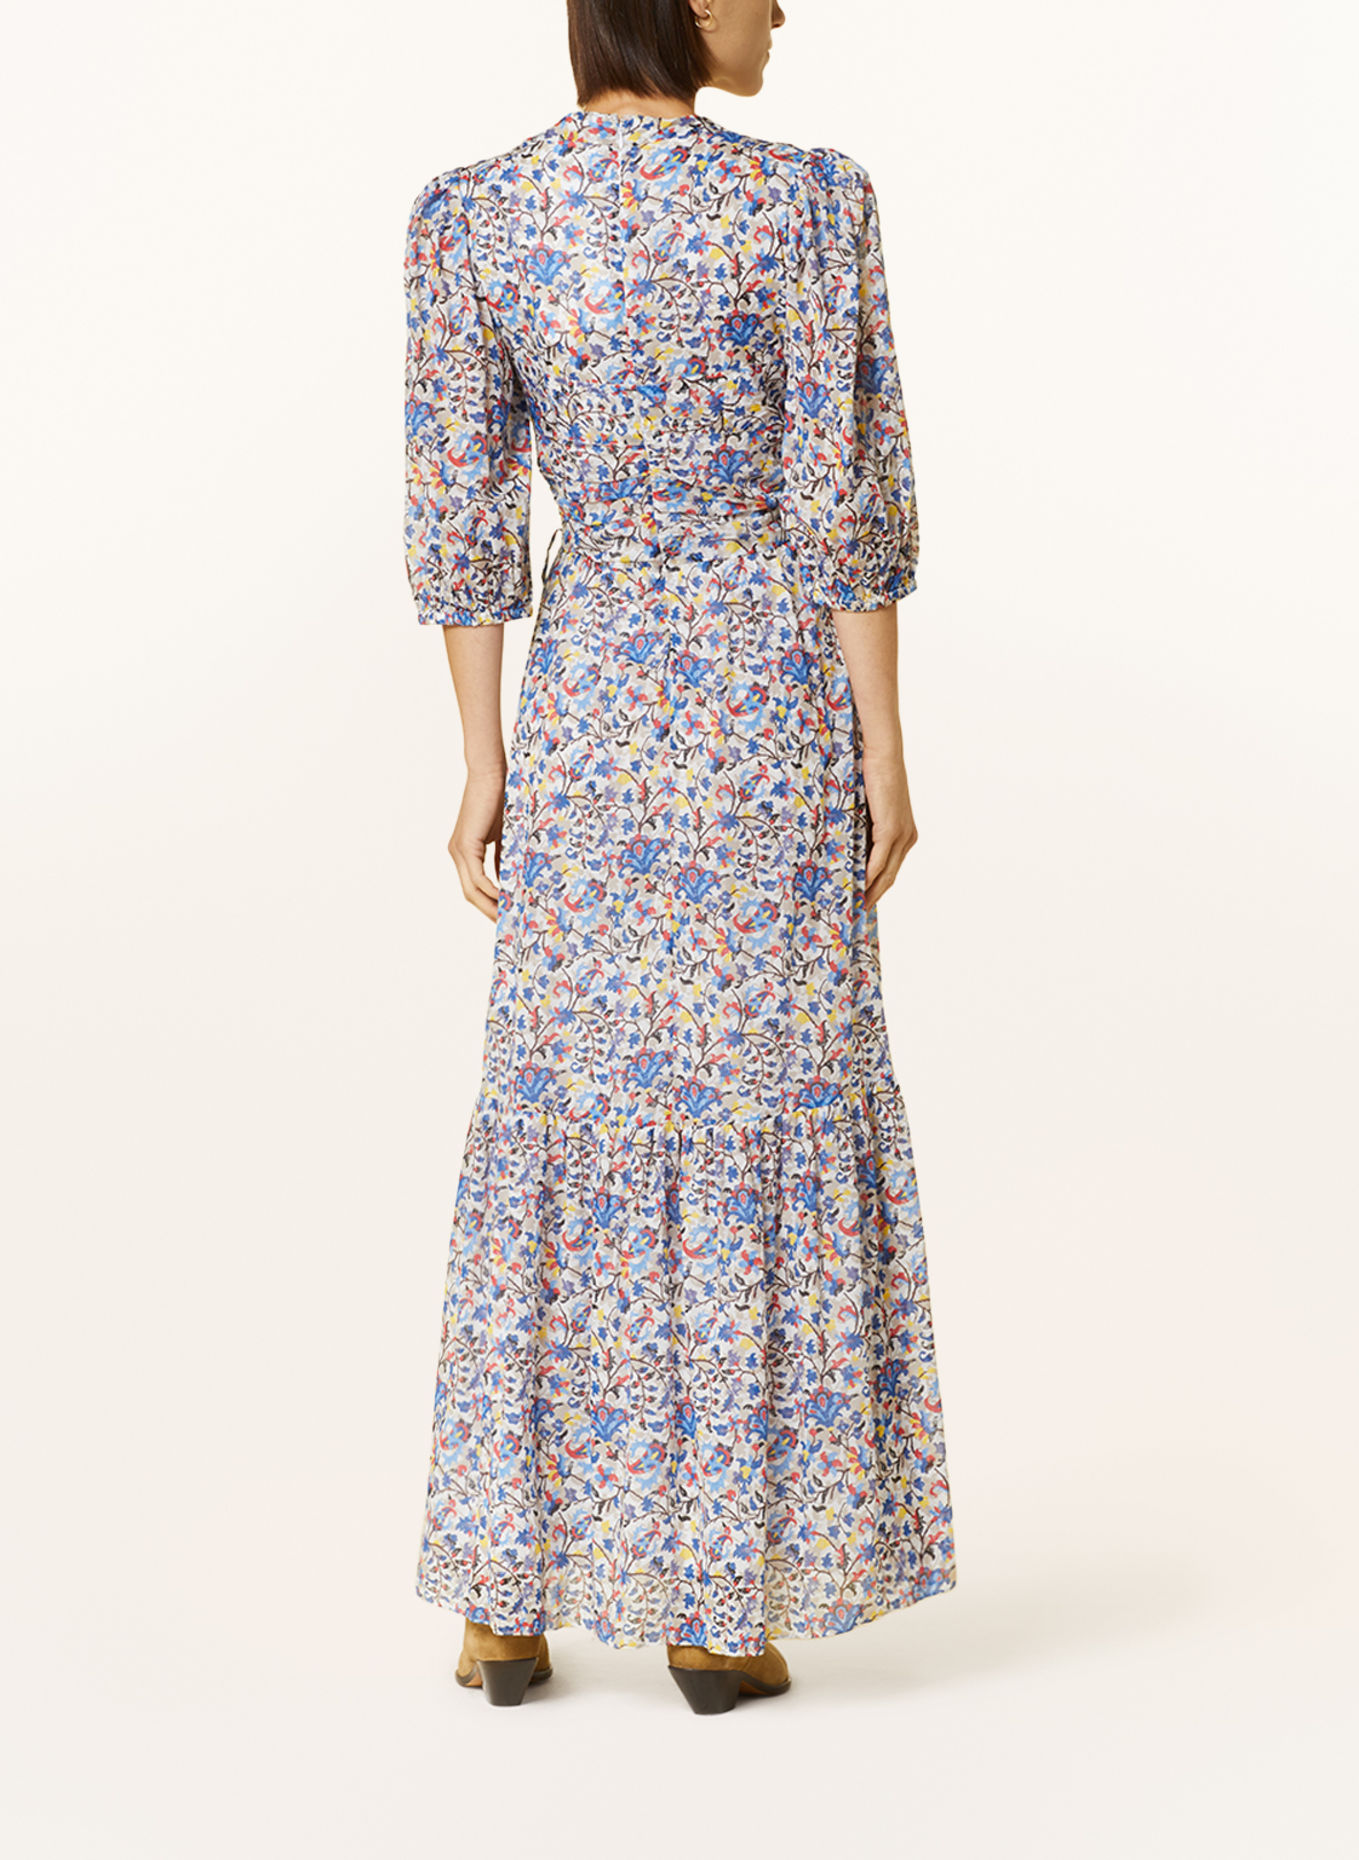 MARANT ÉTOILE Kleid LEONIZA, Farbe: BLAU/ WEISS/ GELB (Bild 3)